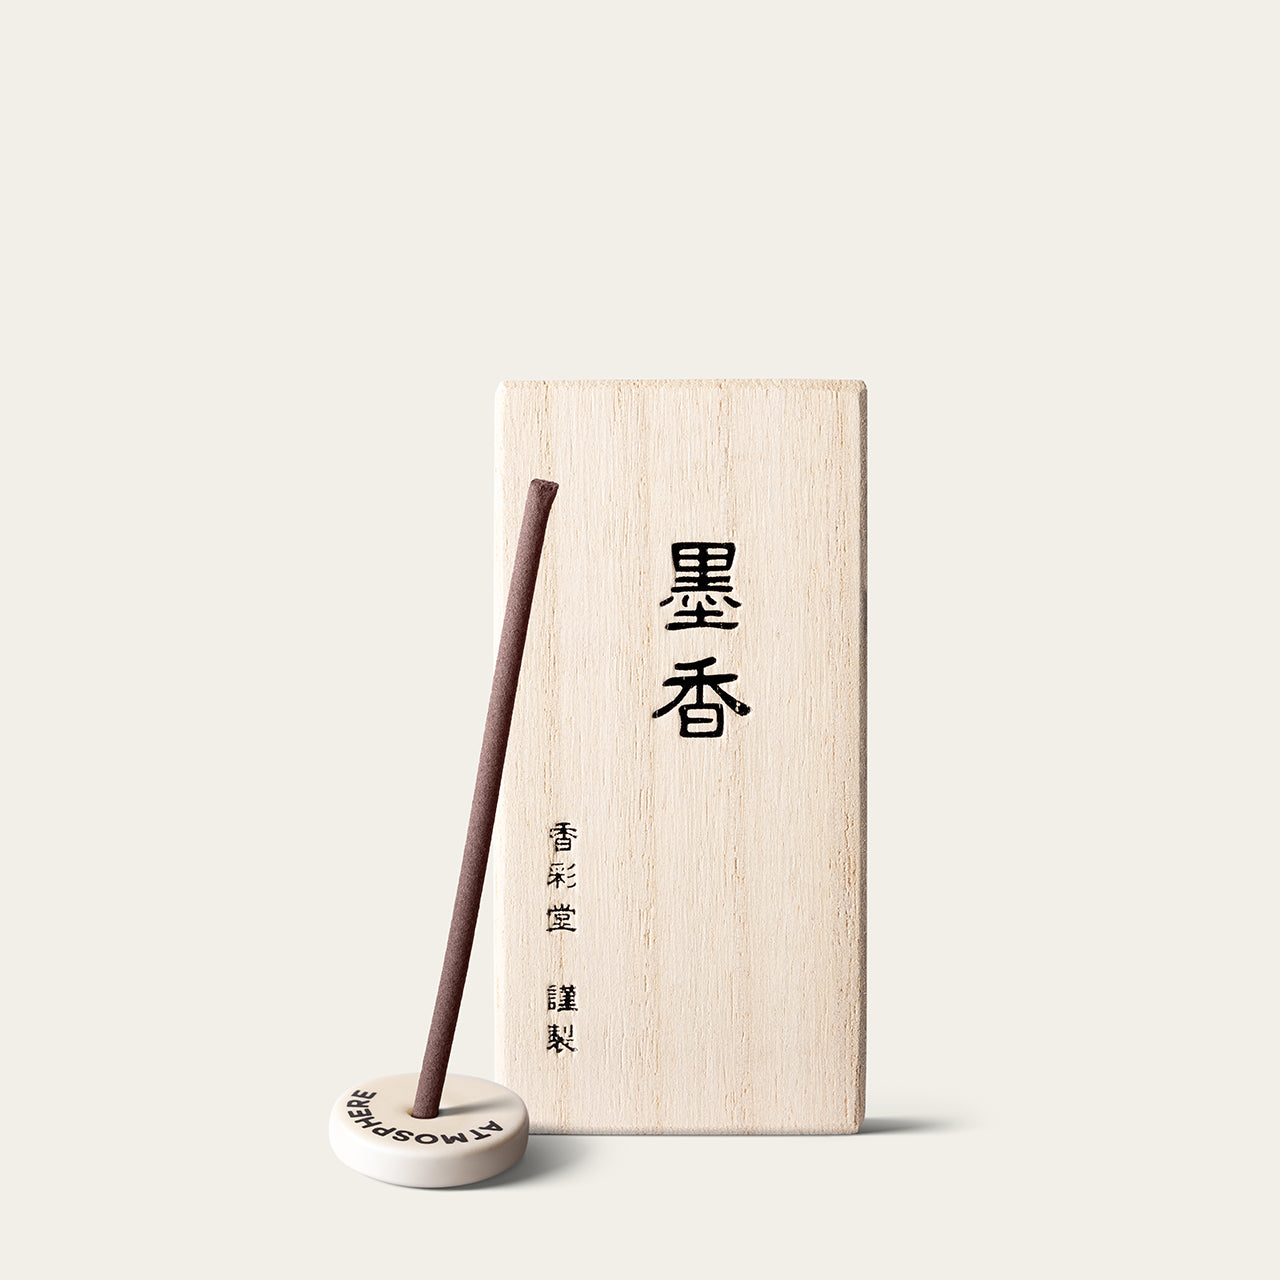 Kousaido Ancient City Sumi Ink Sumika Japanese incense sticks (30 sticks) with Atmosphere ceramic incense holder